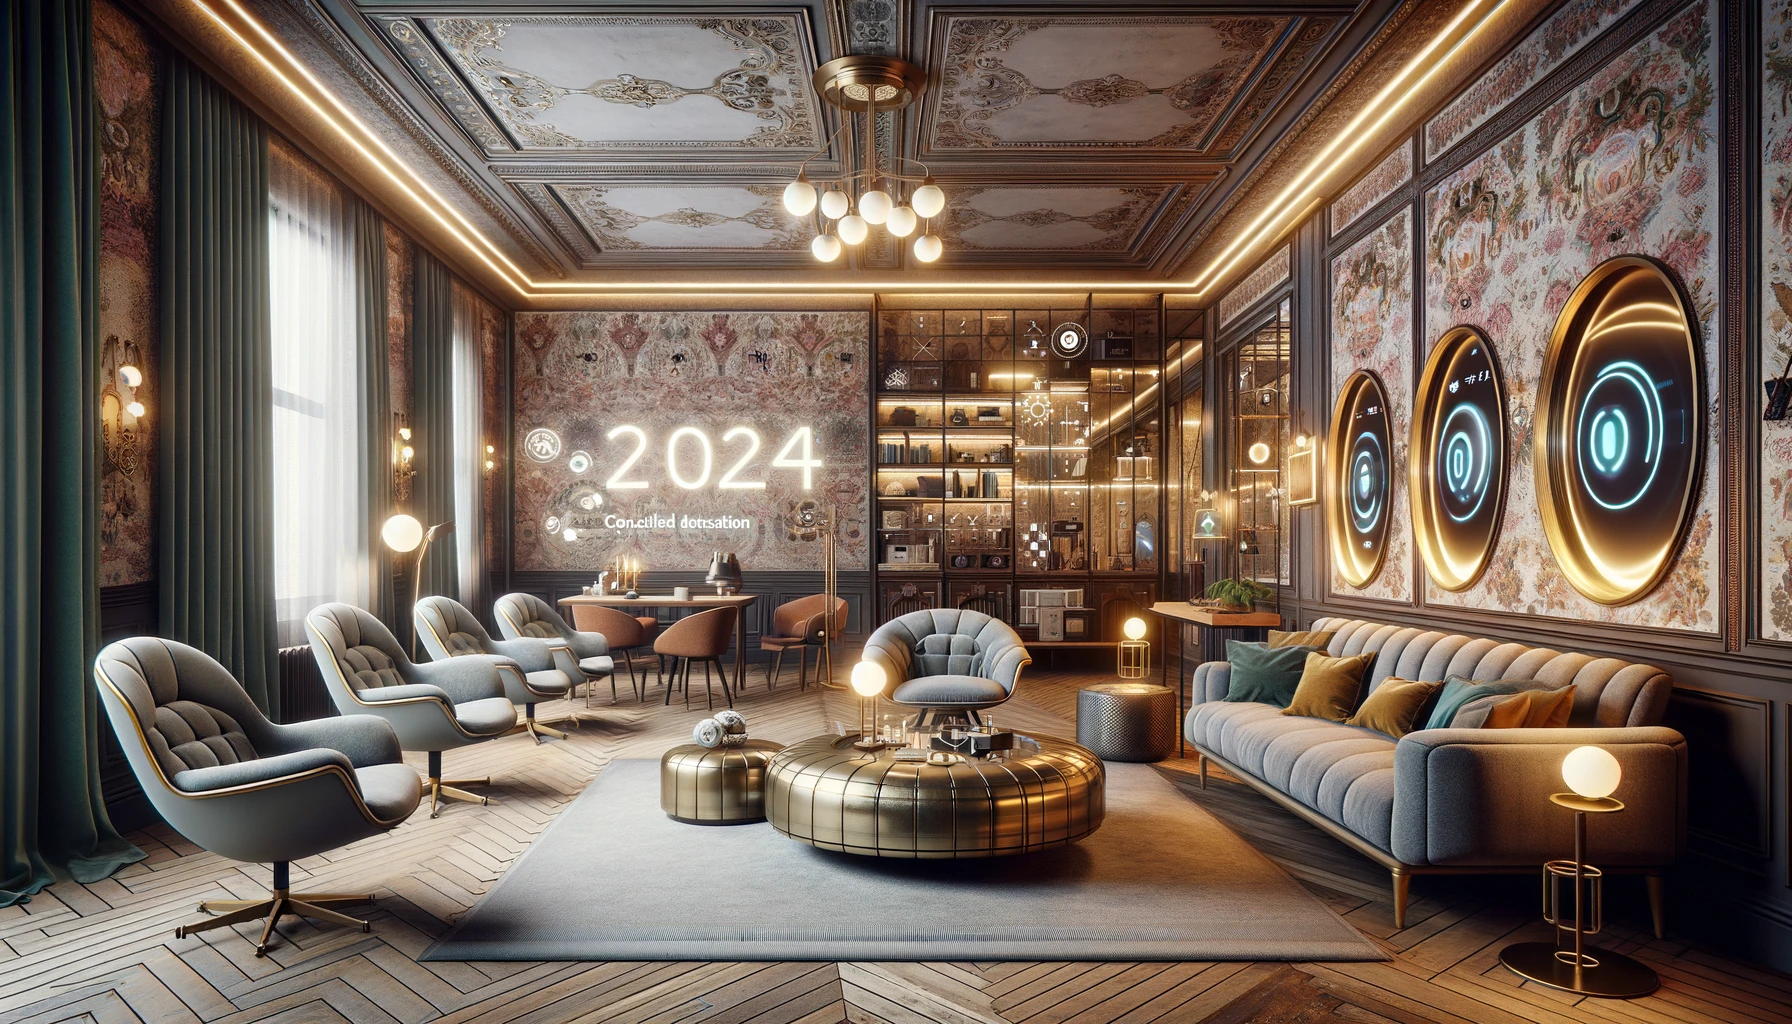 2024 lounge room - Elegant modern vintage interior with futuristic elements.